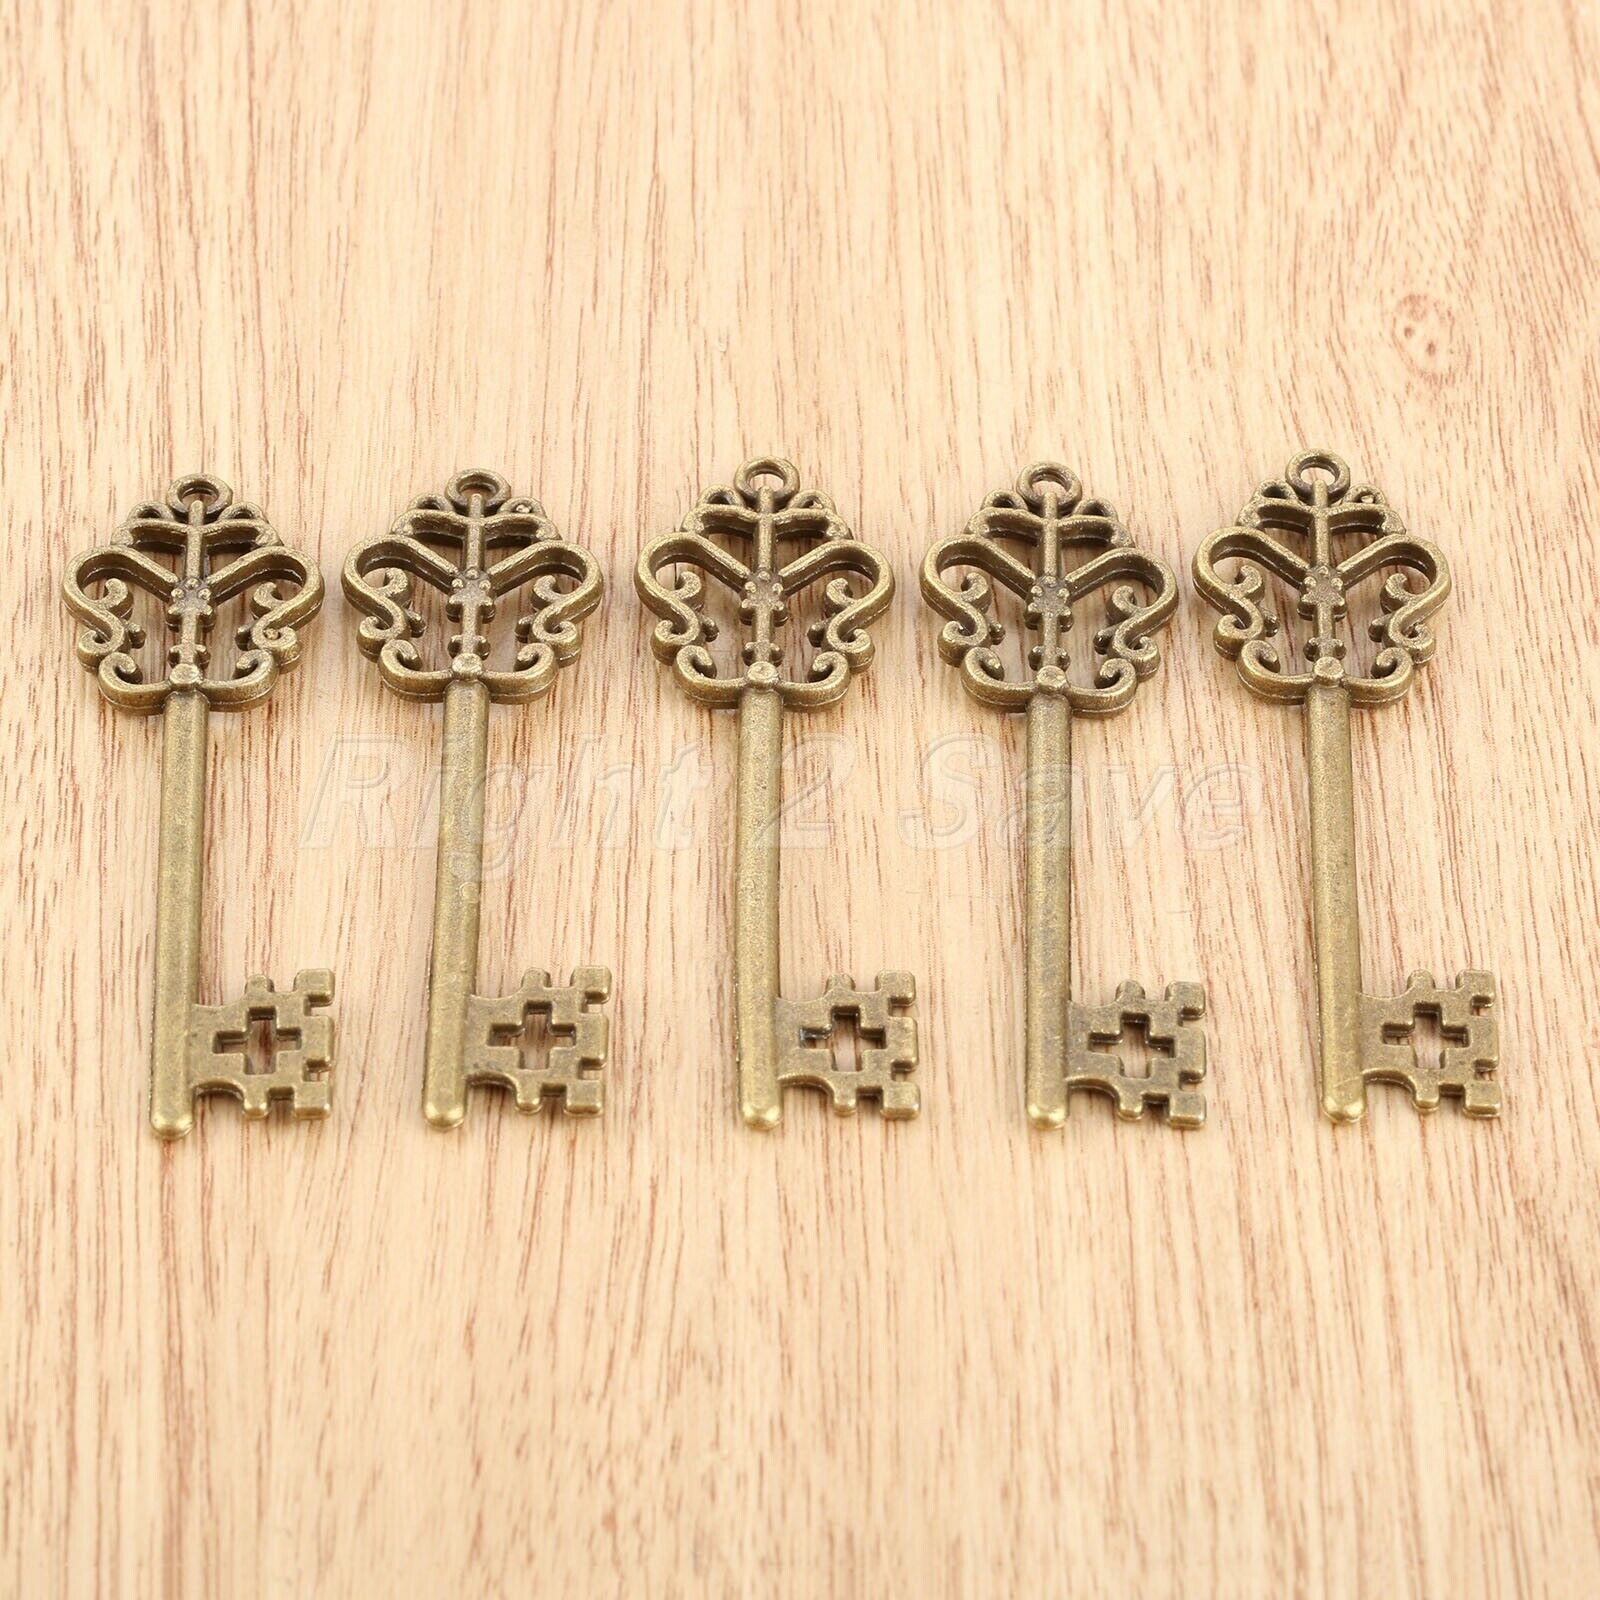 Retro Skeleton Key Charms Pendant Findings Wedding Gift Jewelry Making 57mm*17mm